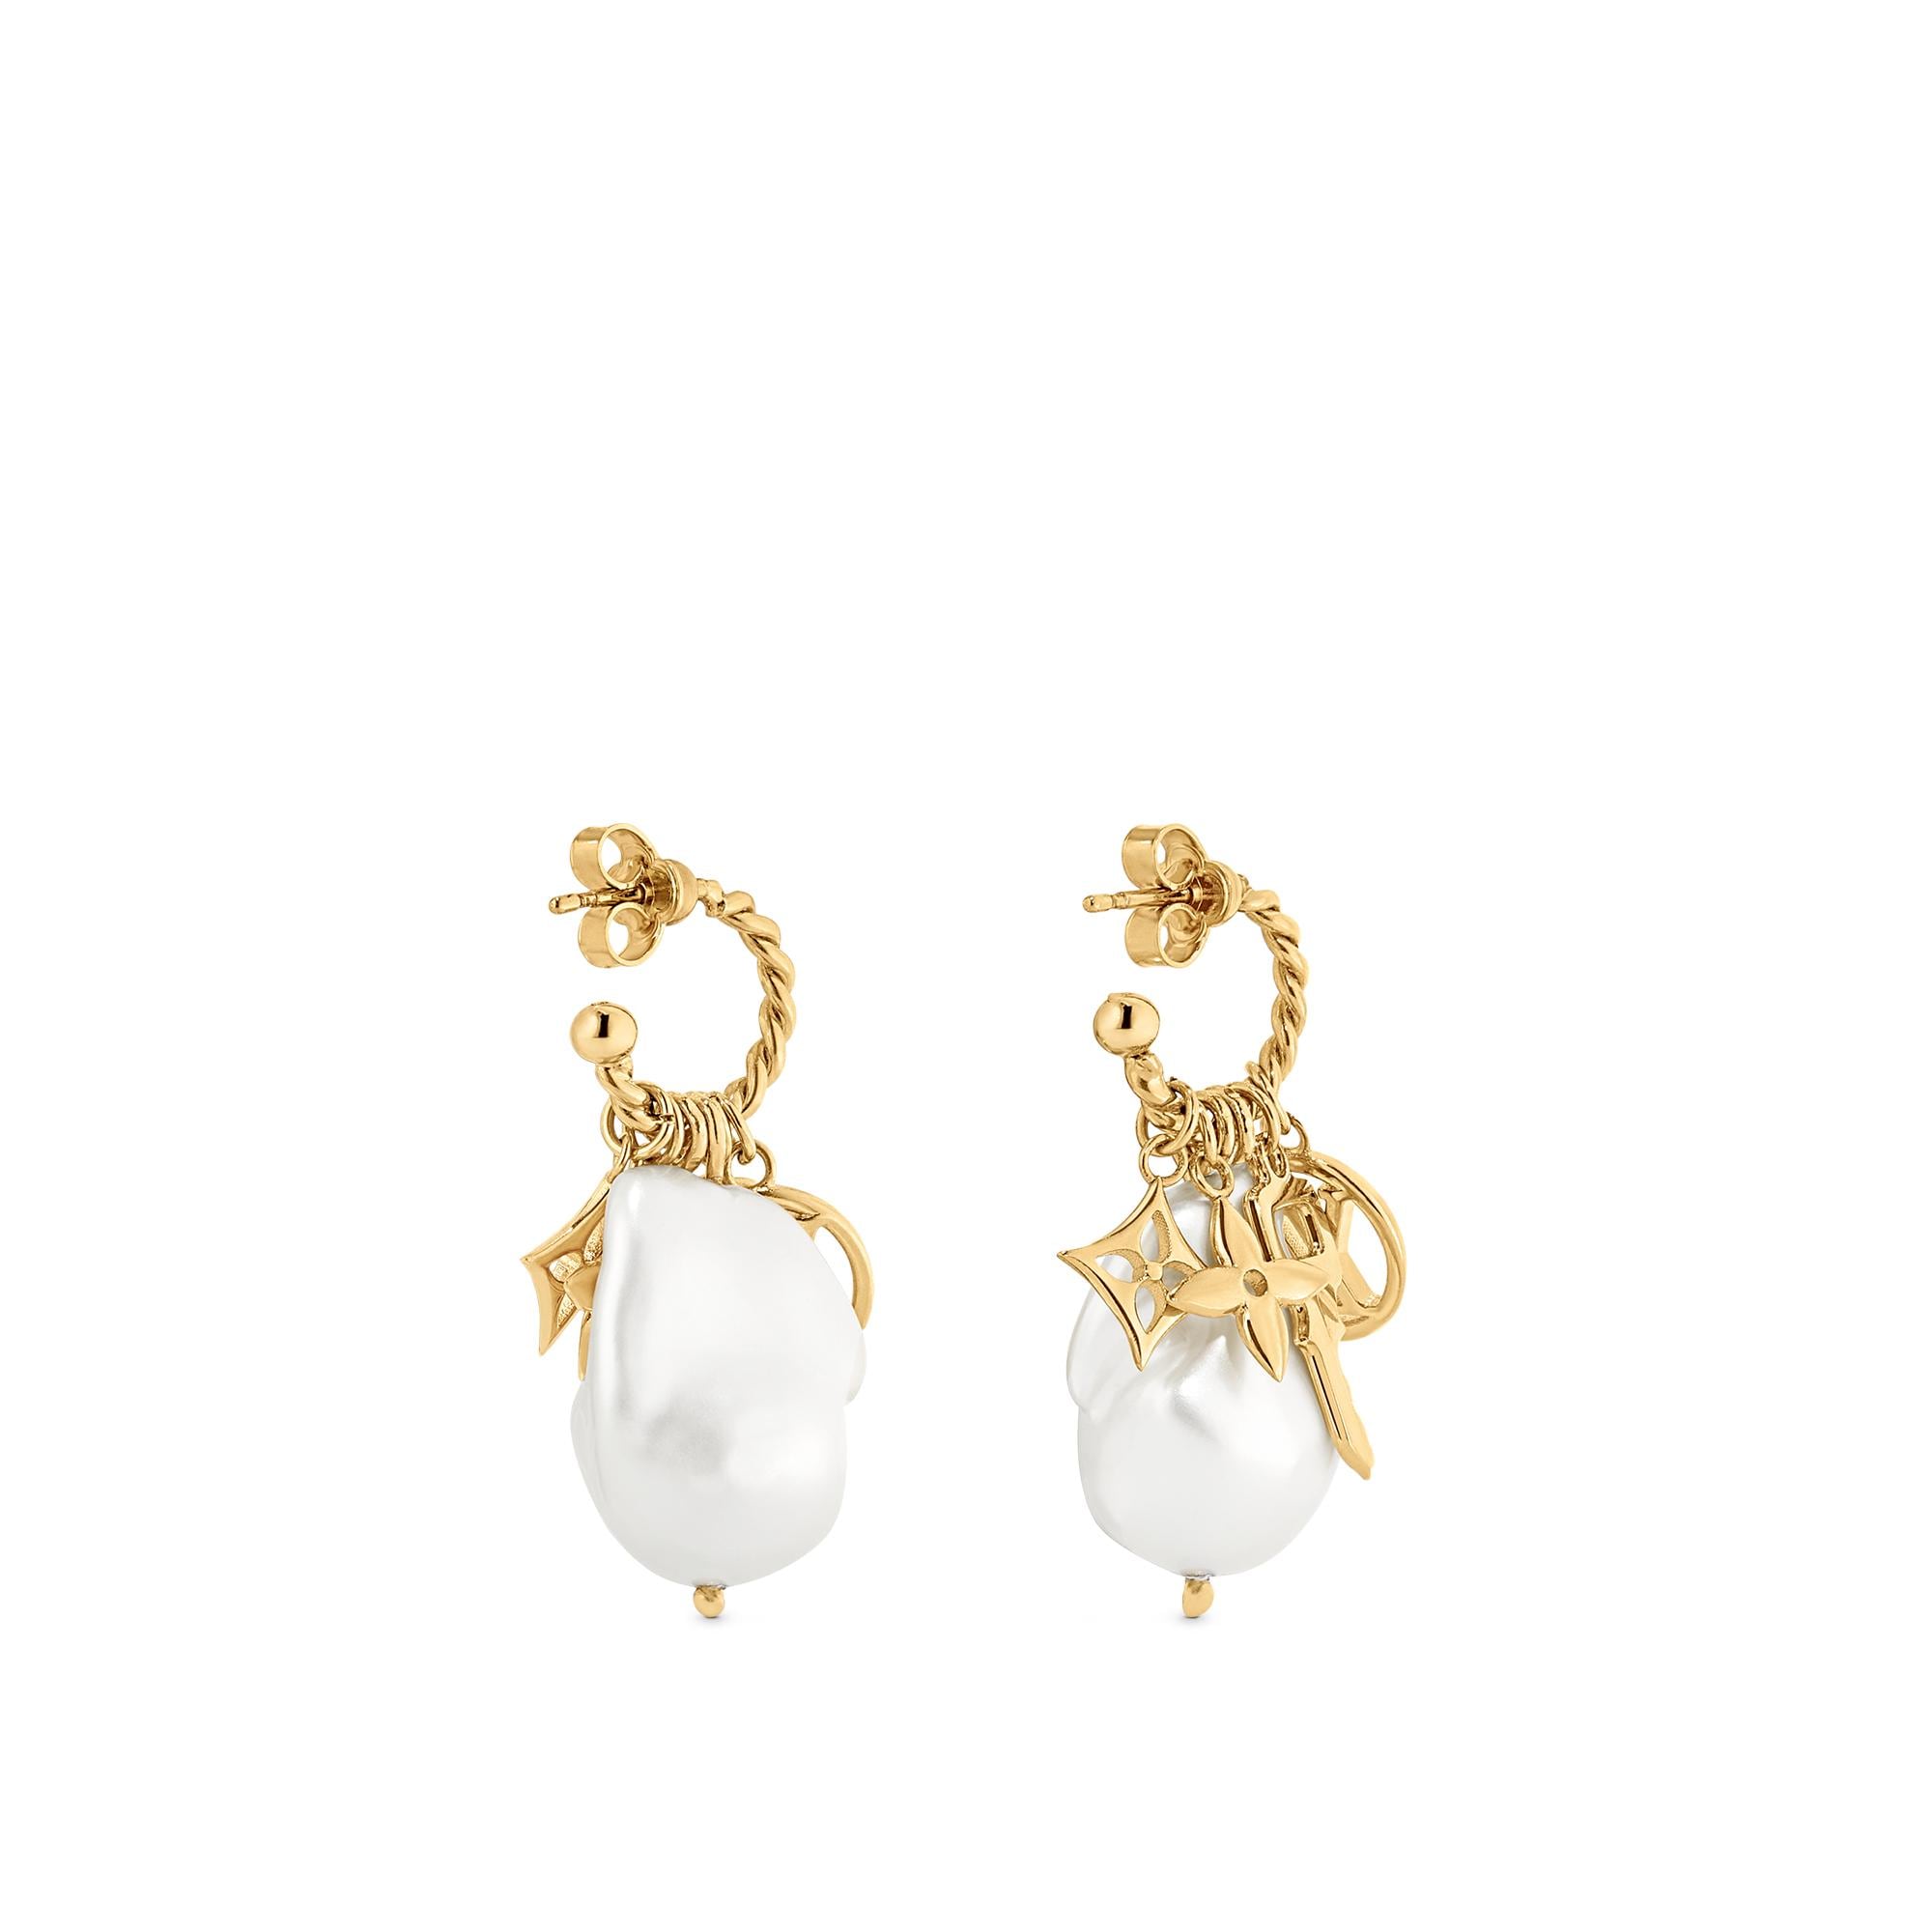 Louis Vuitton Perfect match earrings (M00394)